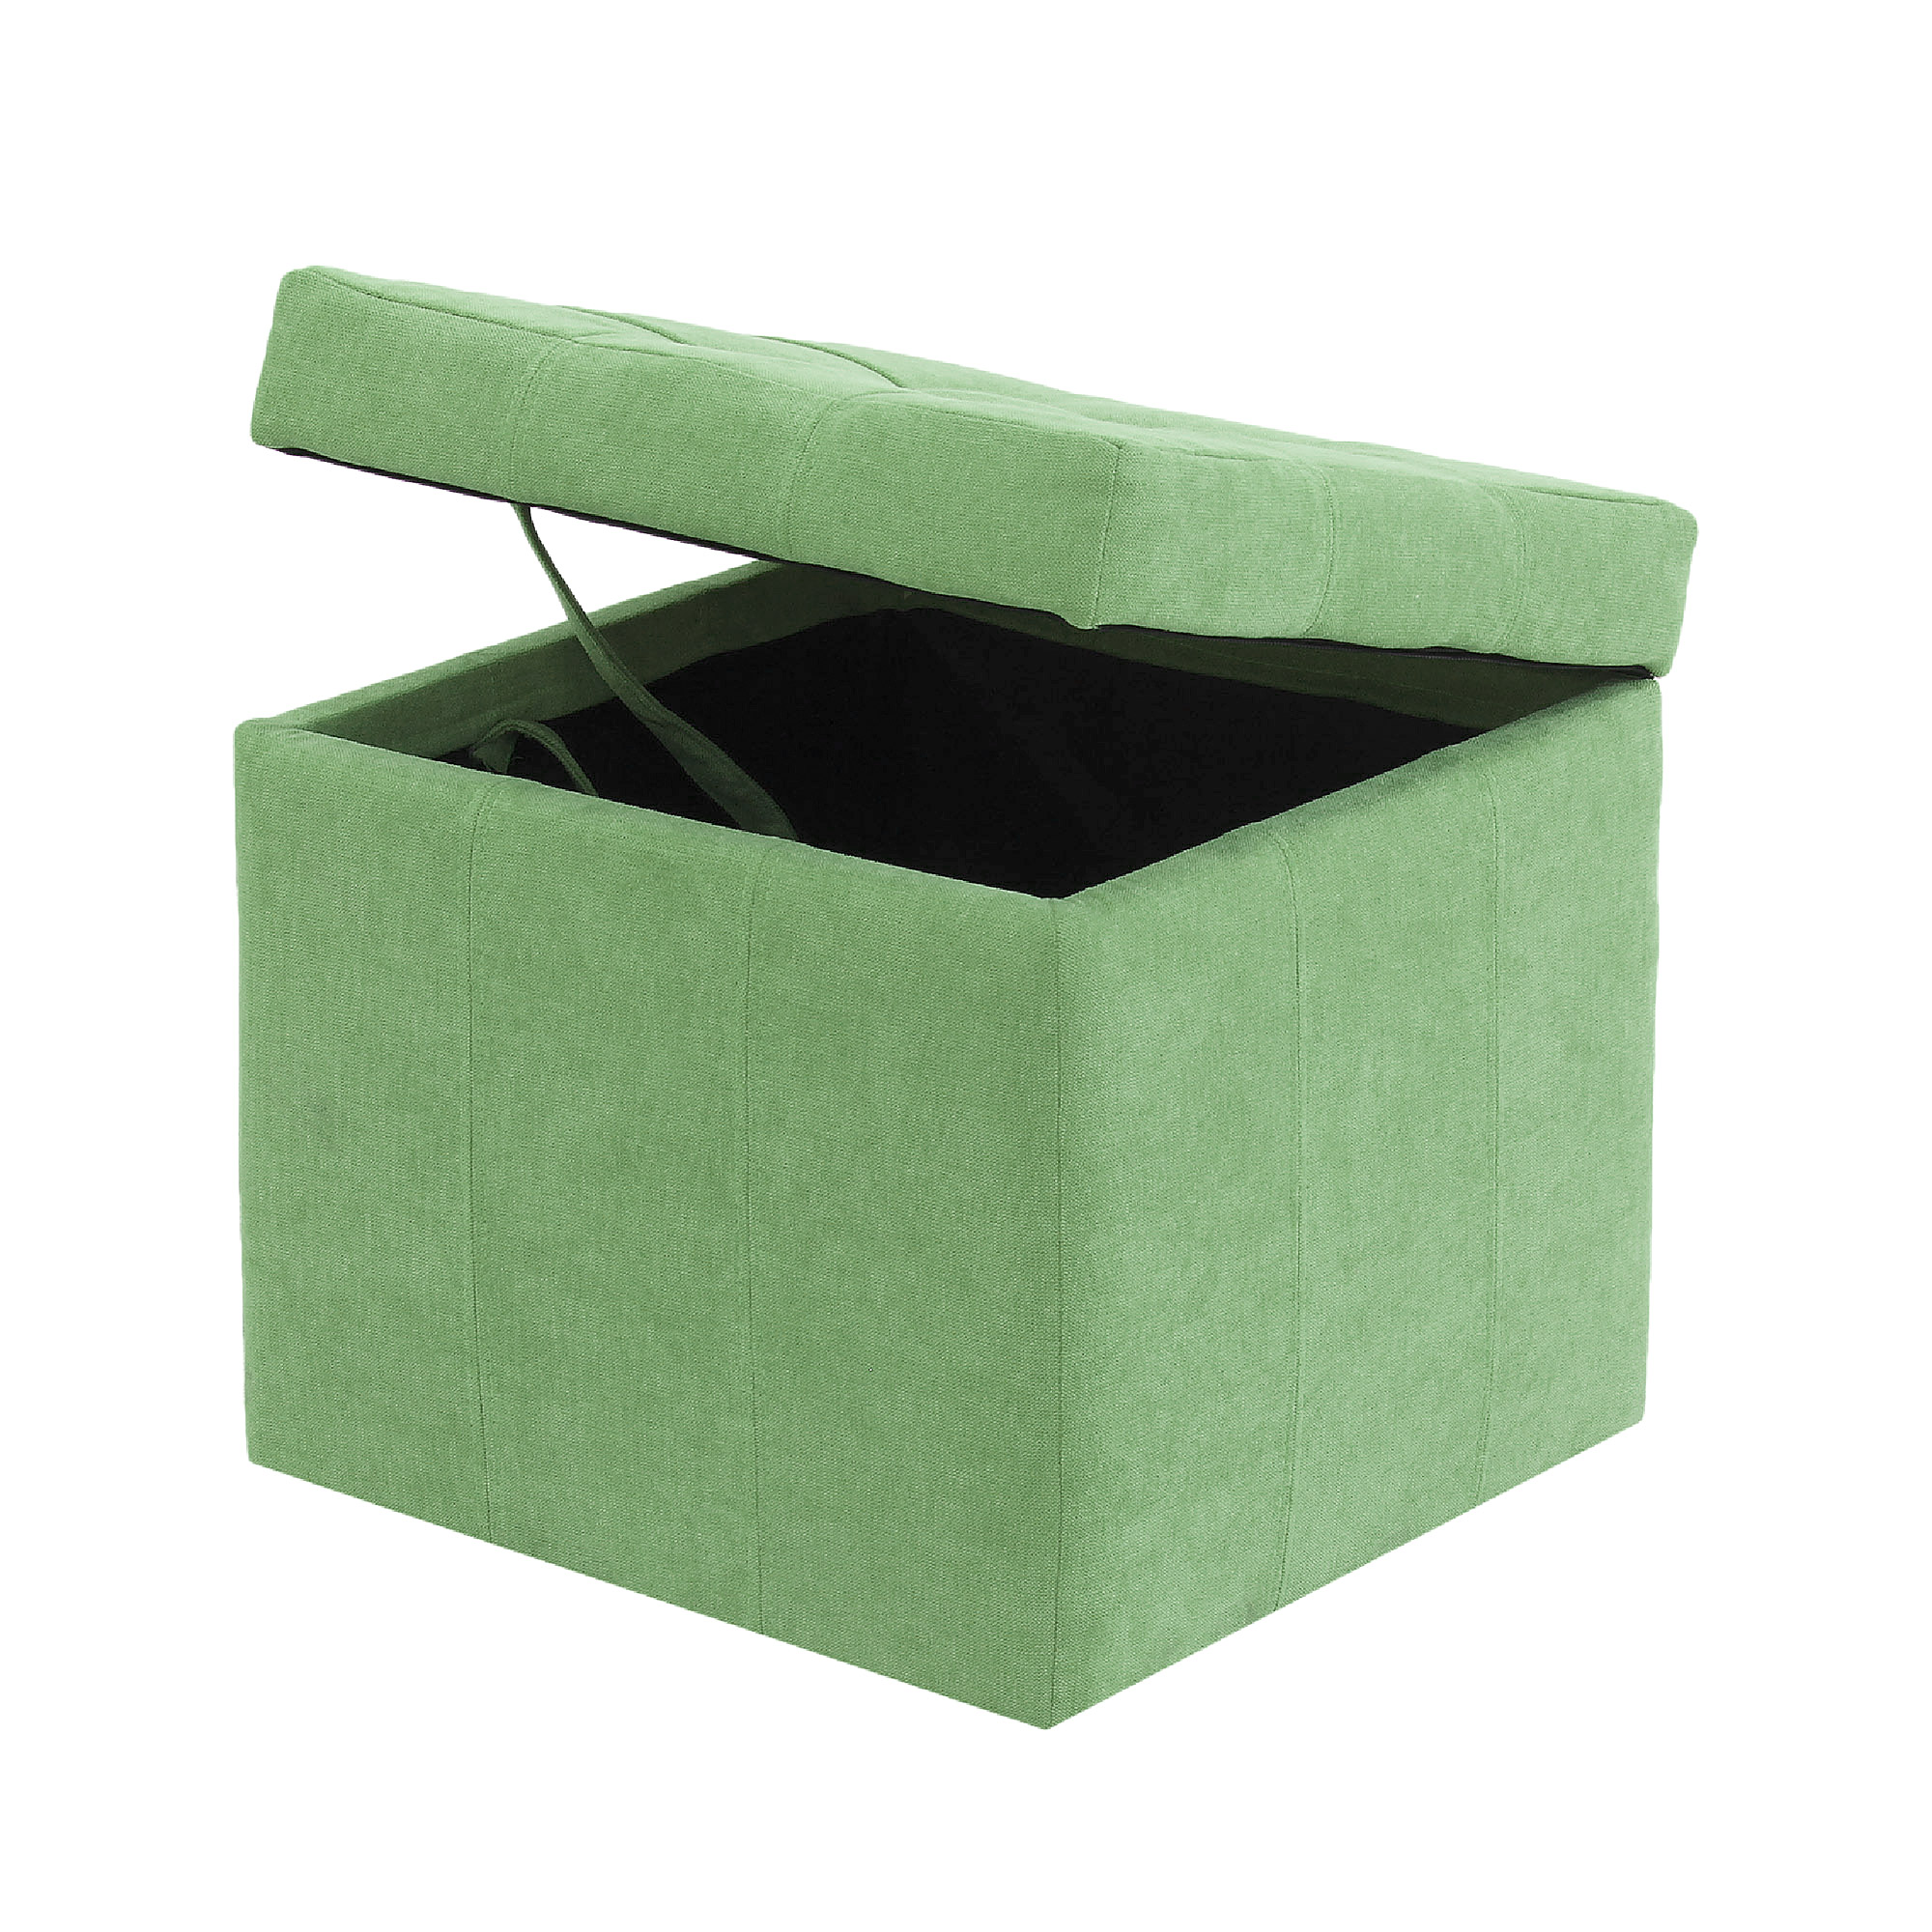 Банкетка Dreambag модерна зеленый велюр 46х46х46, размер 46х46х46 см - фото 3